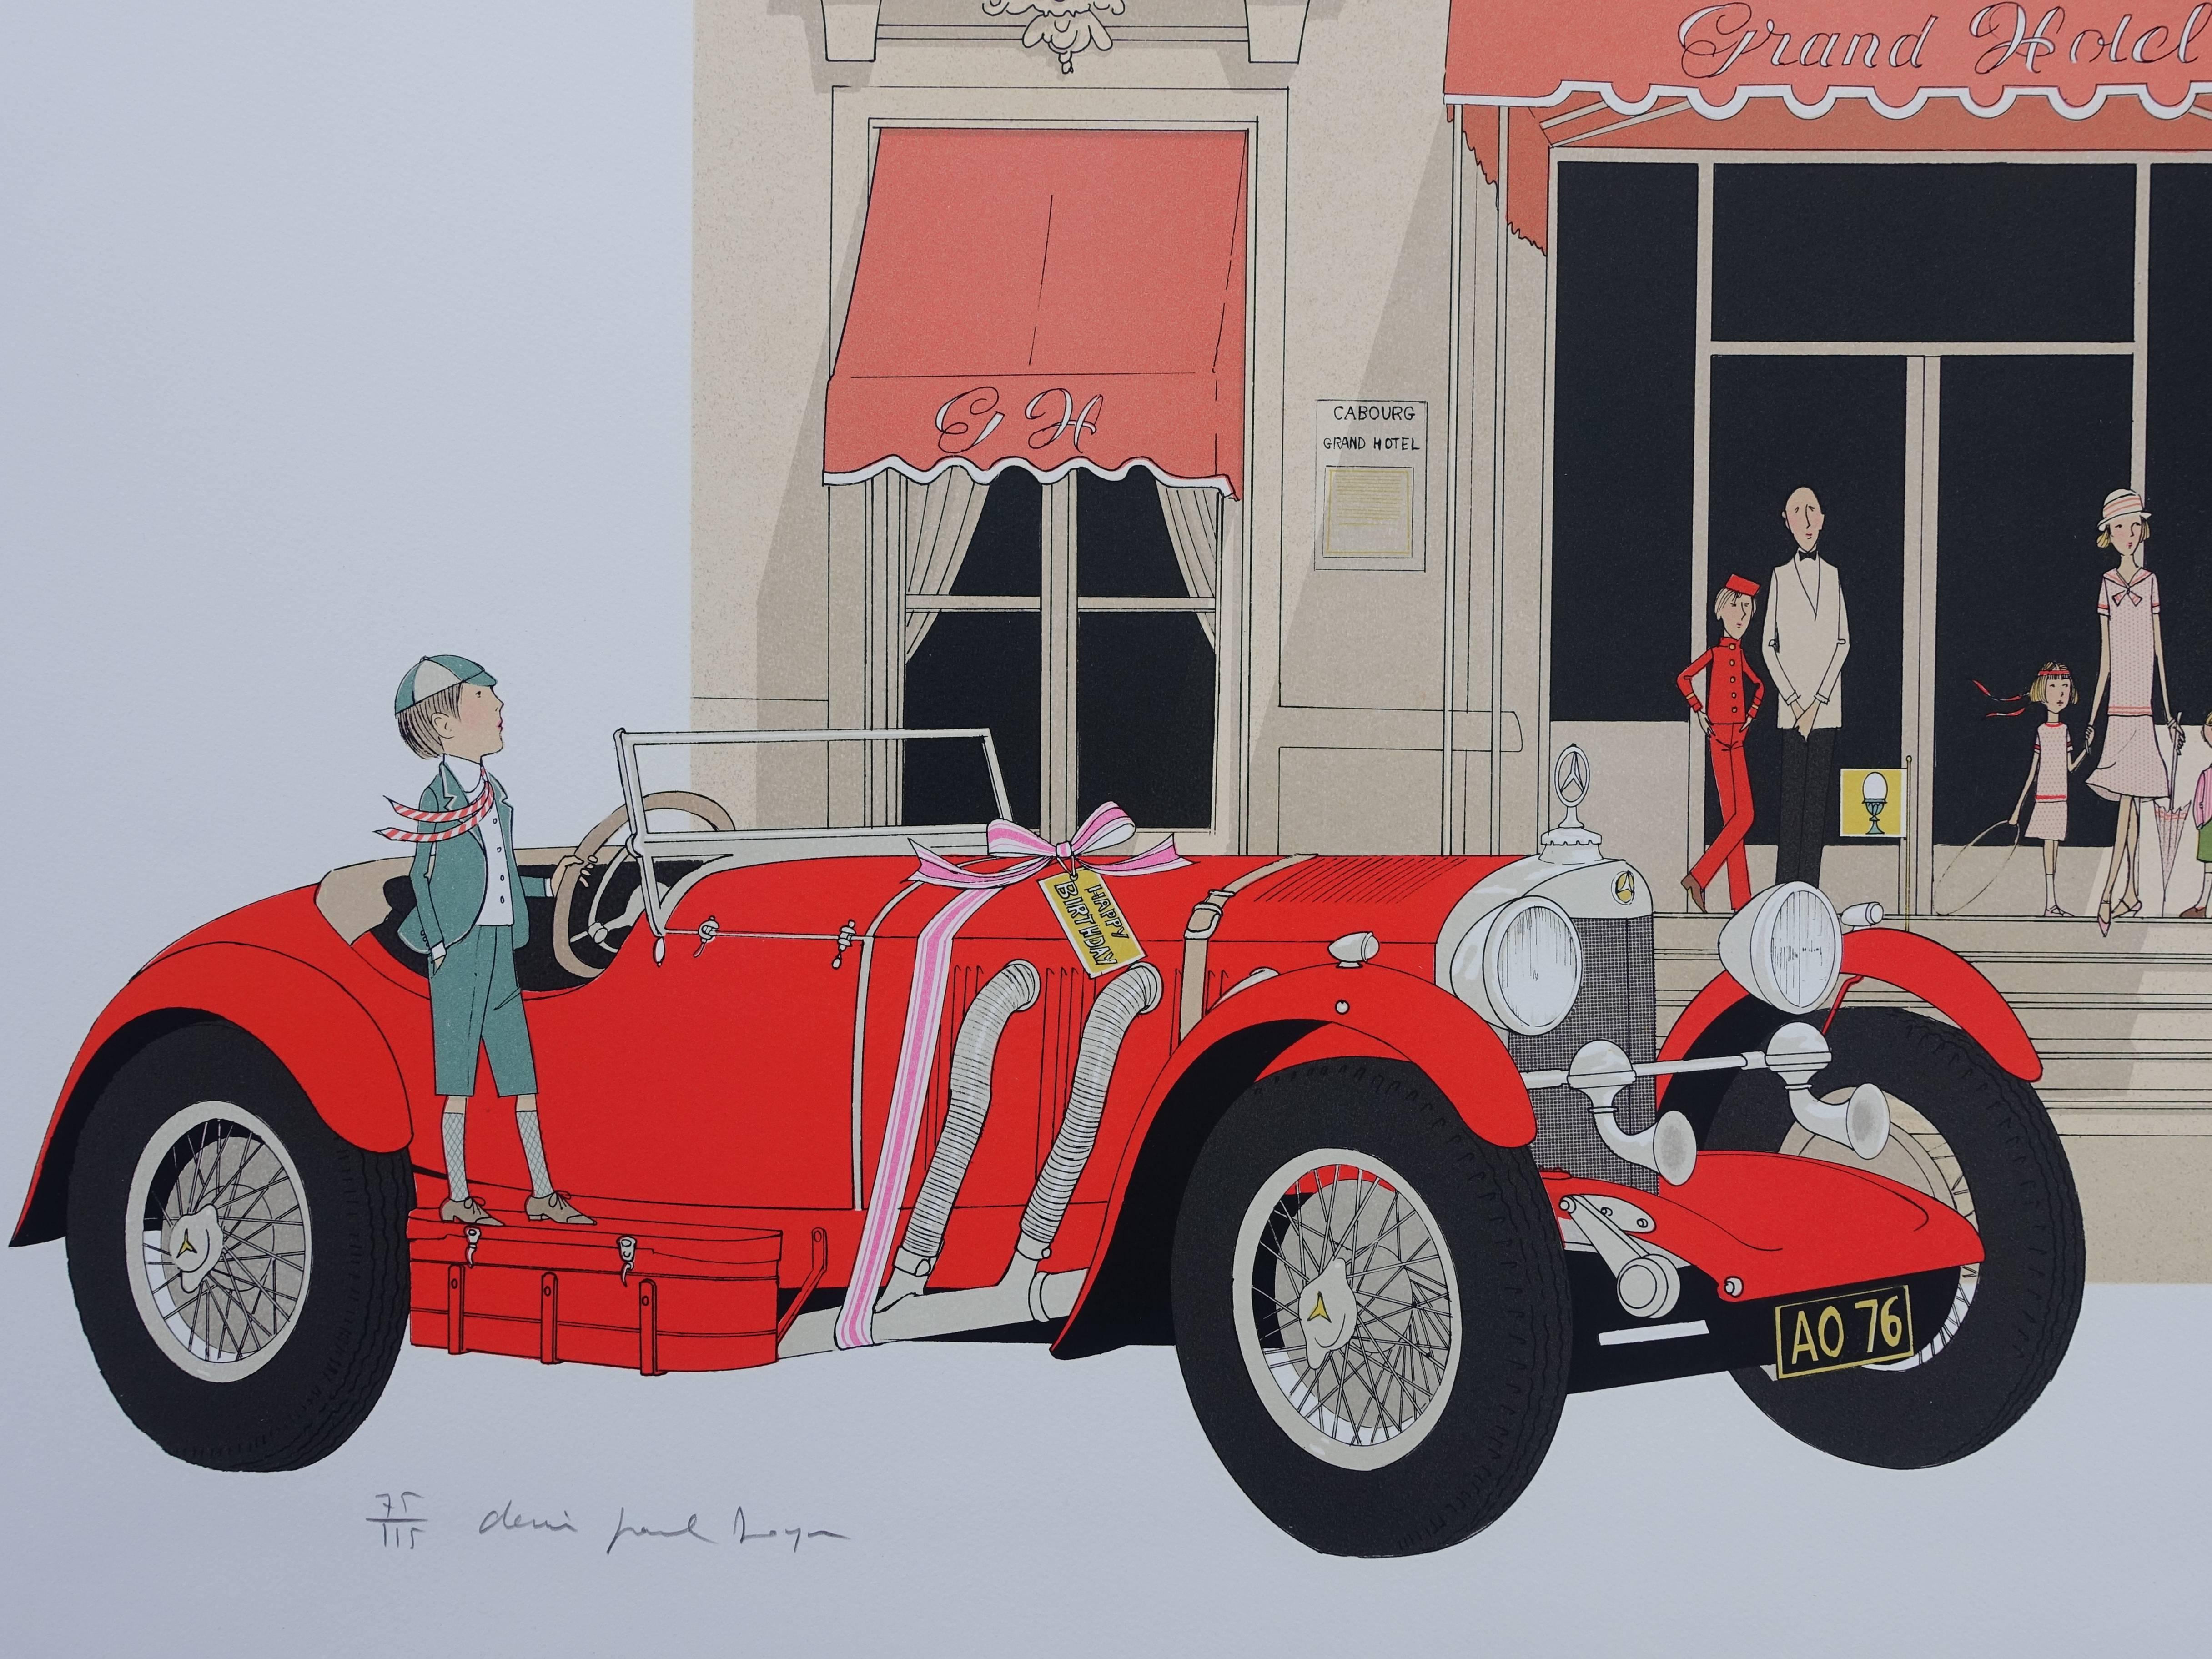 Mercedes 710 - Cabourg Grand Hotel - Original handsigned lithograph - 115ex - Art Deco Print by Denis Paul Noyer